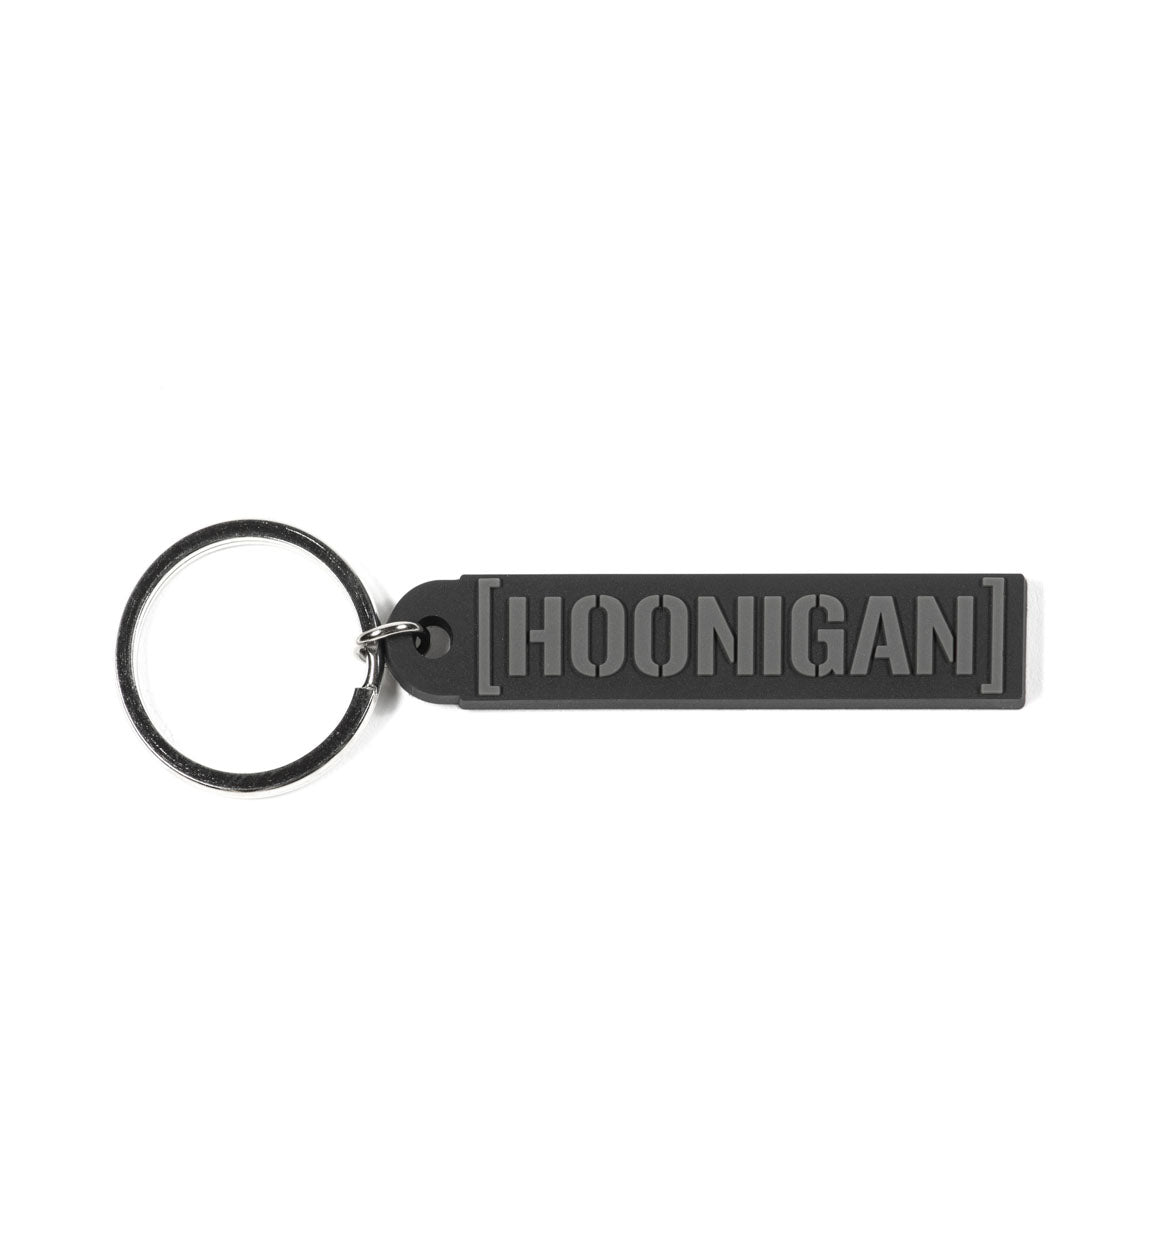 Hoonigan CENSOR BAR Rubber Key Chain